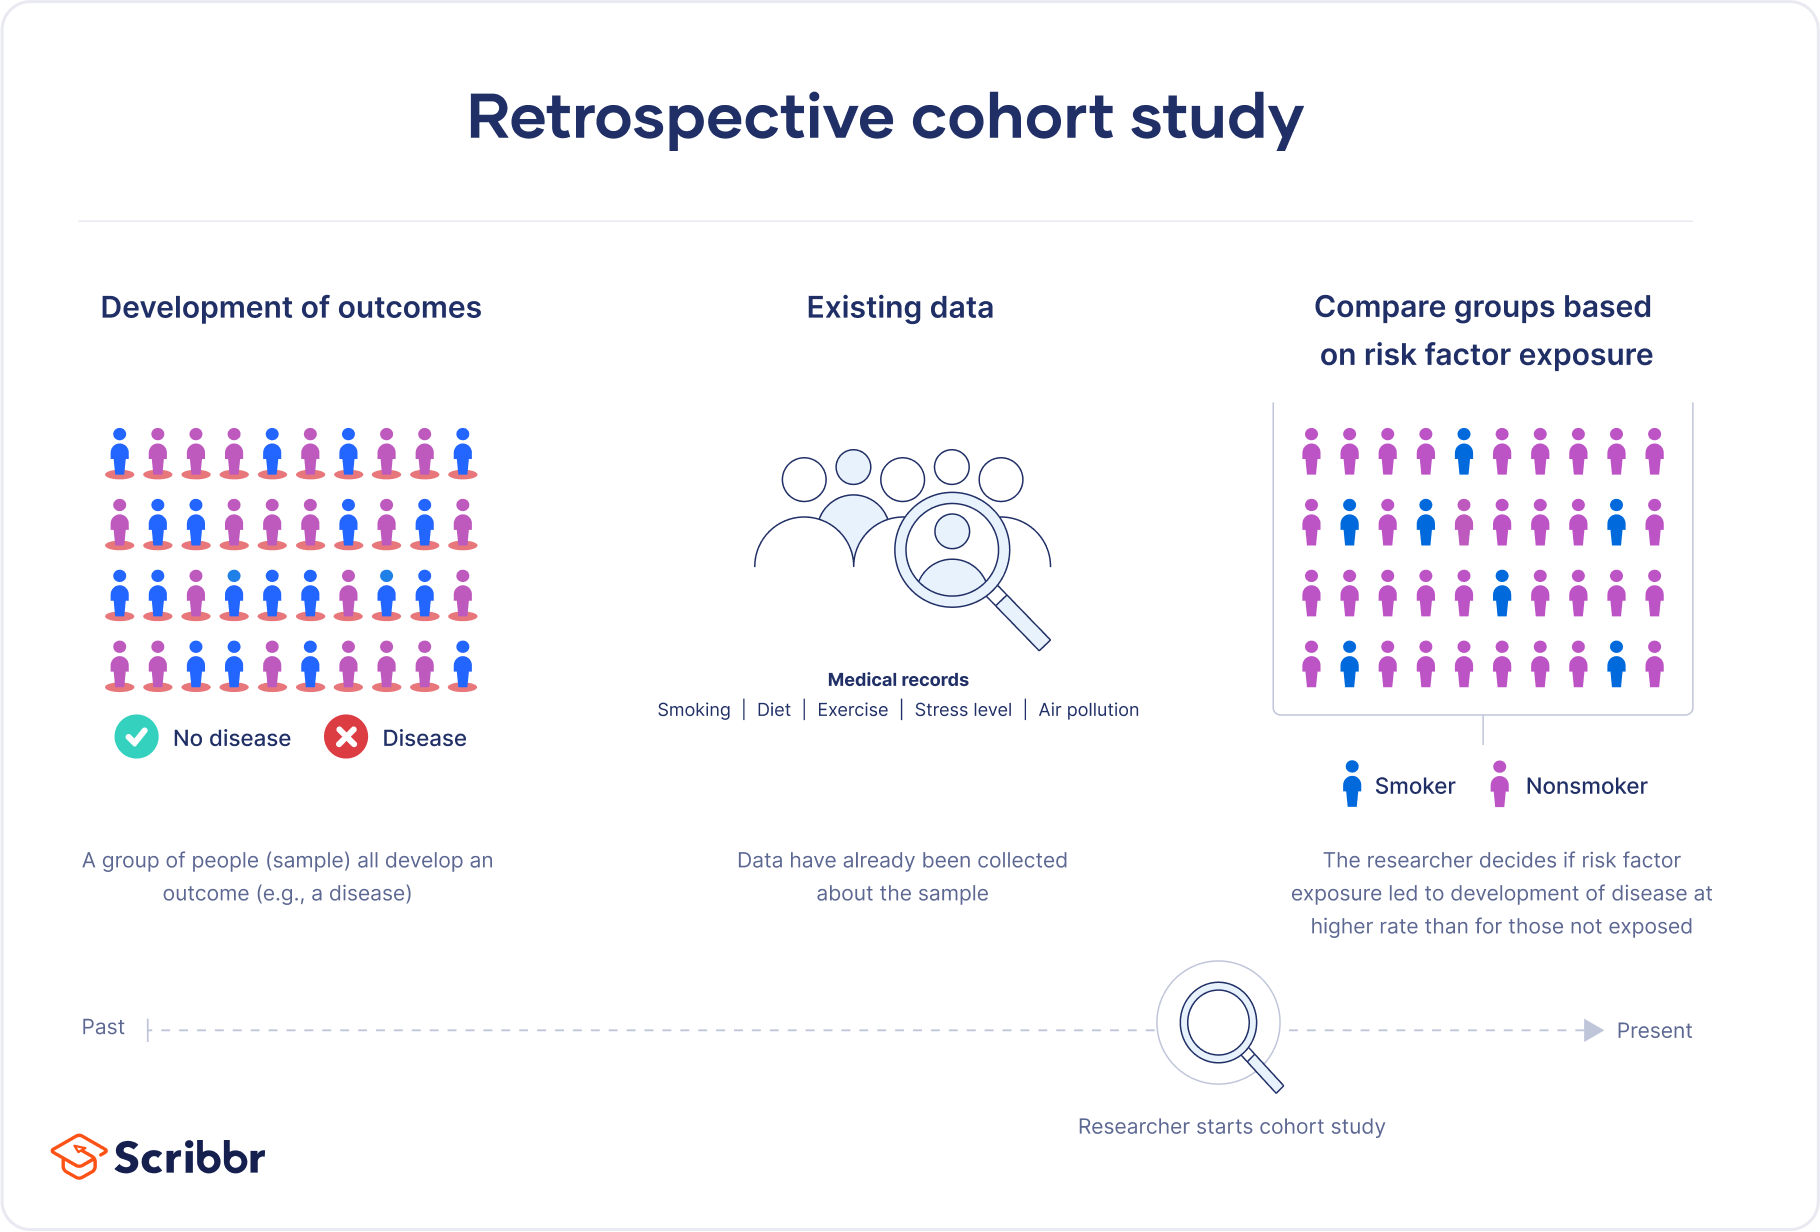 Retrospective cohort study